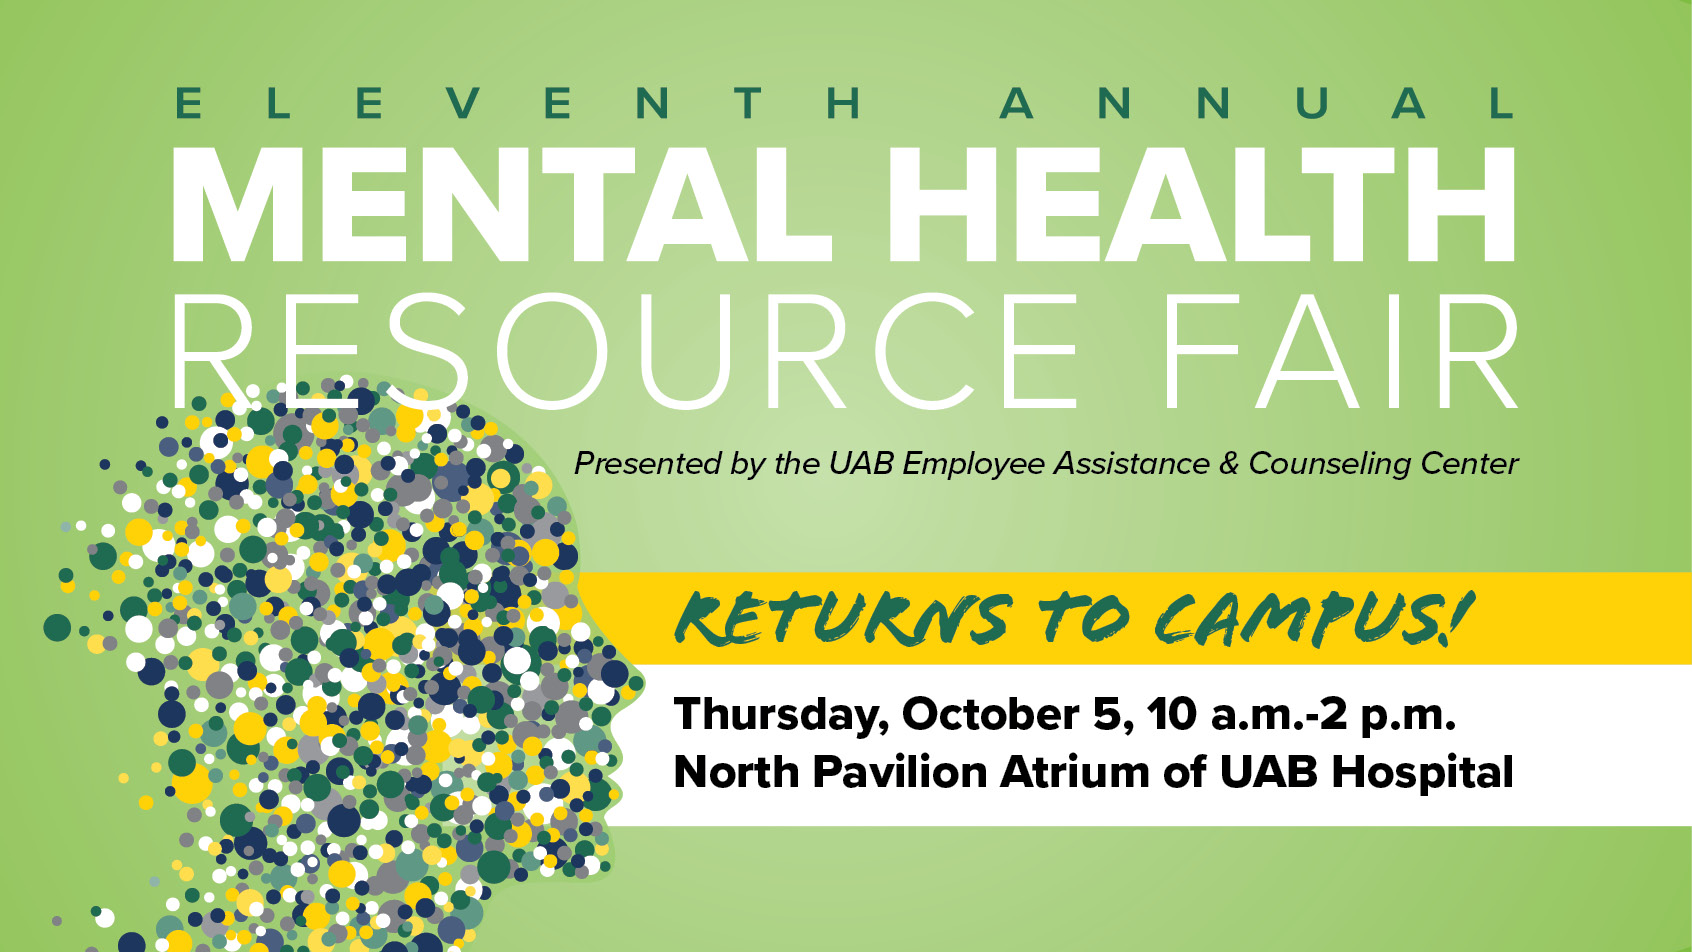 11th Annual Mental Health Resource Fair - Thursday, October 5, 10:00am-2:00pm, North Pavilion Atrium